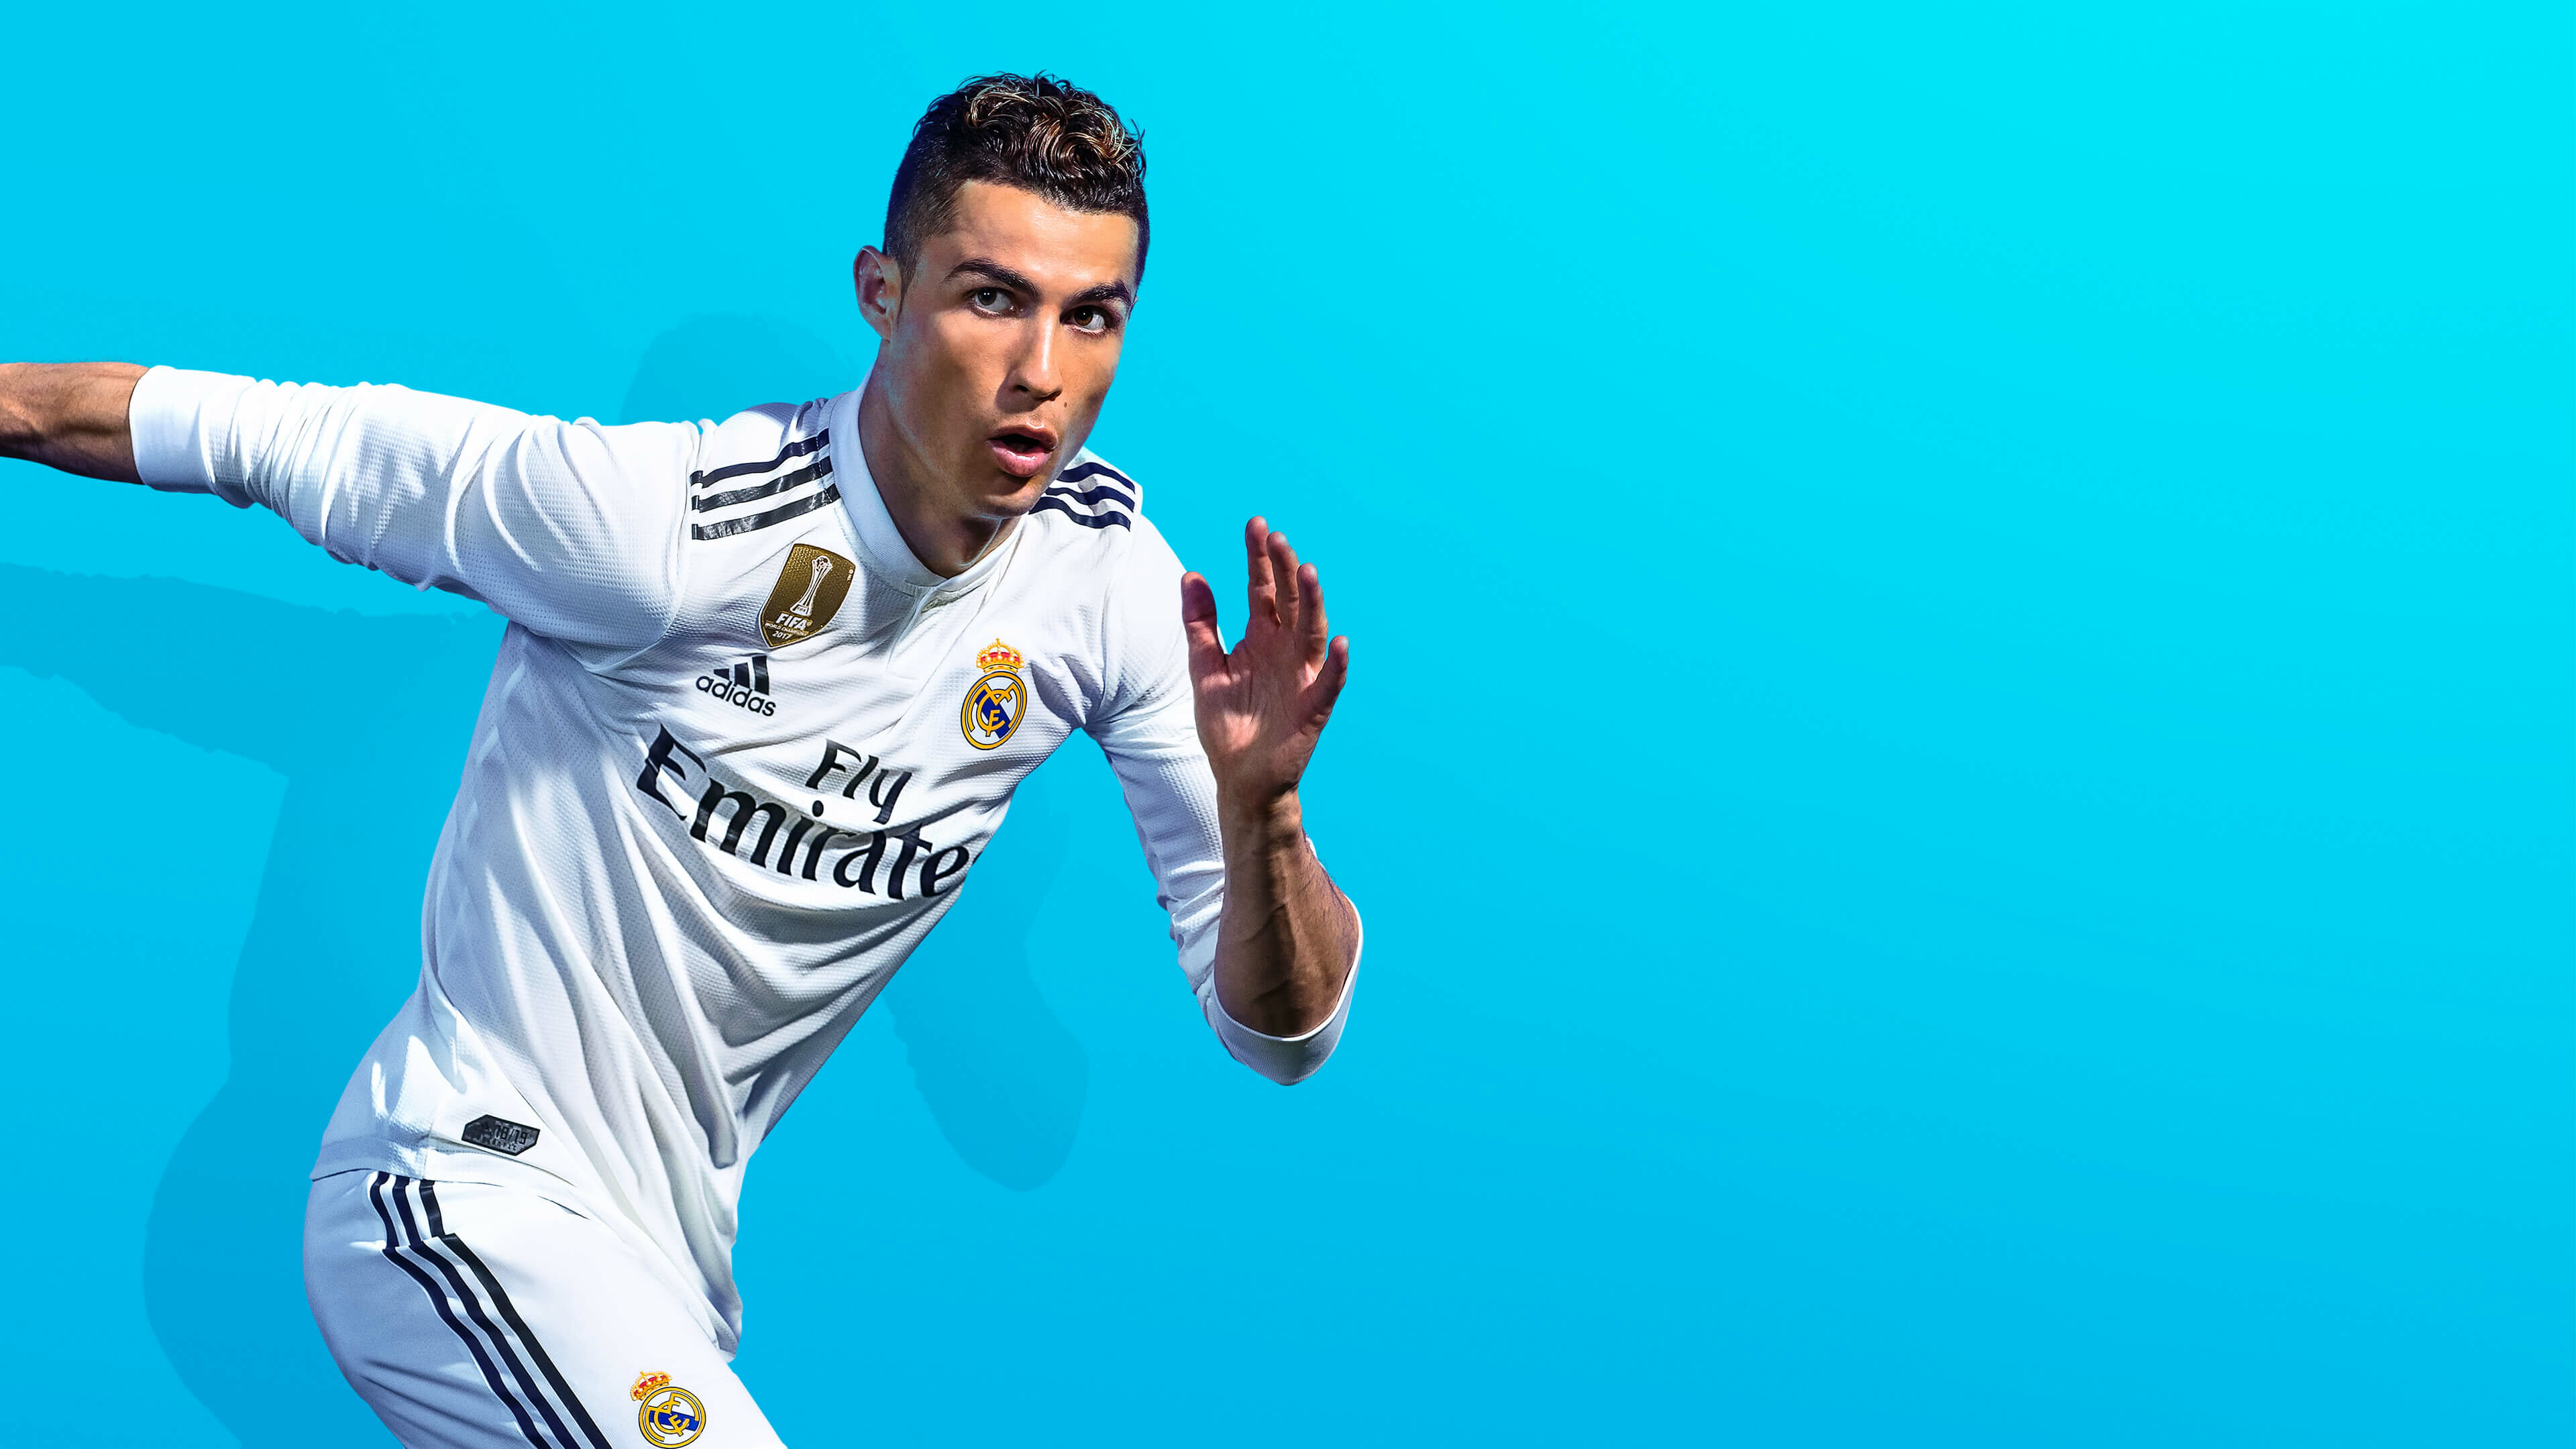 FIFA 19, Ronaldo wallpapers, Dynamic poses, Football superstar, 3840x2160 4K Desktop